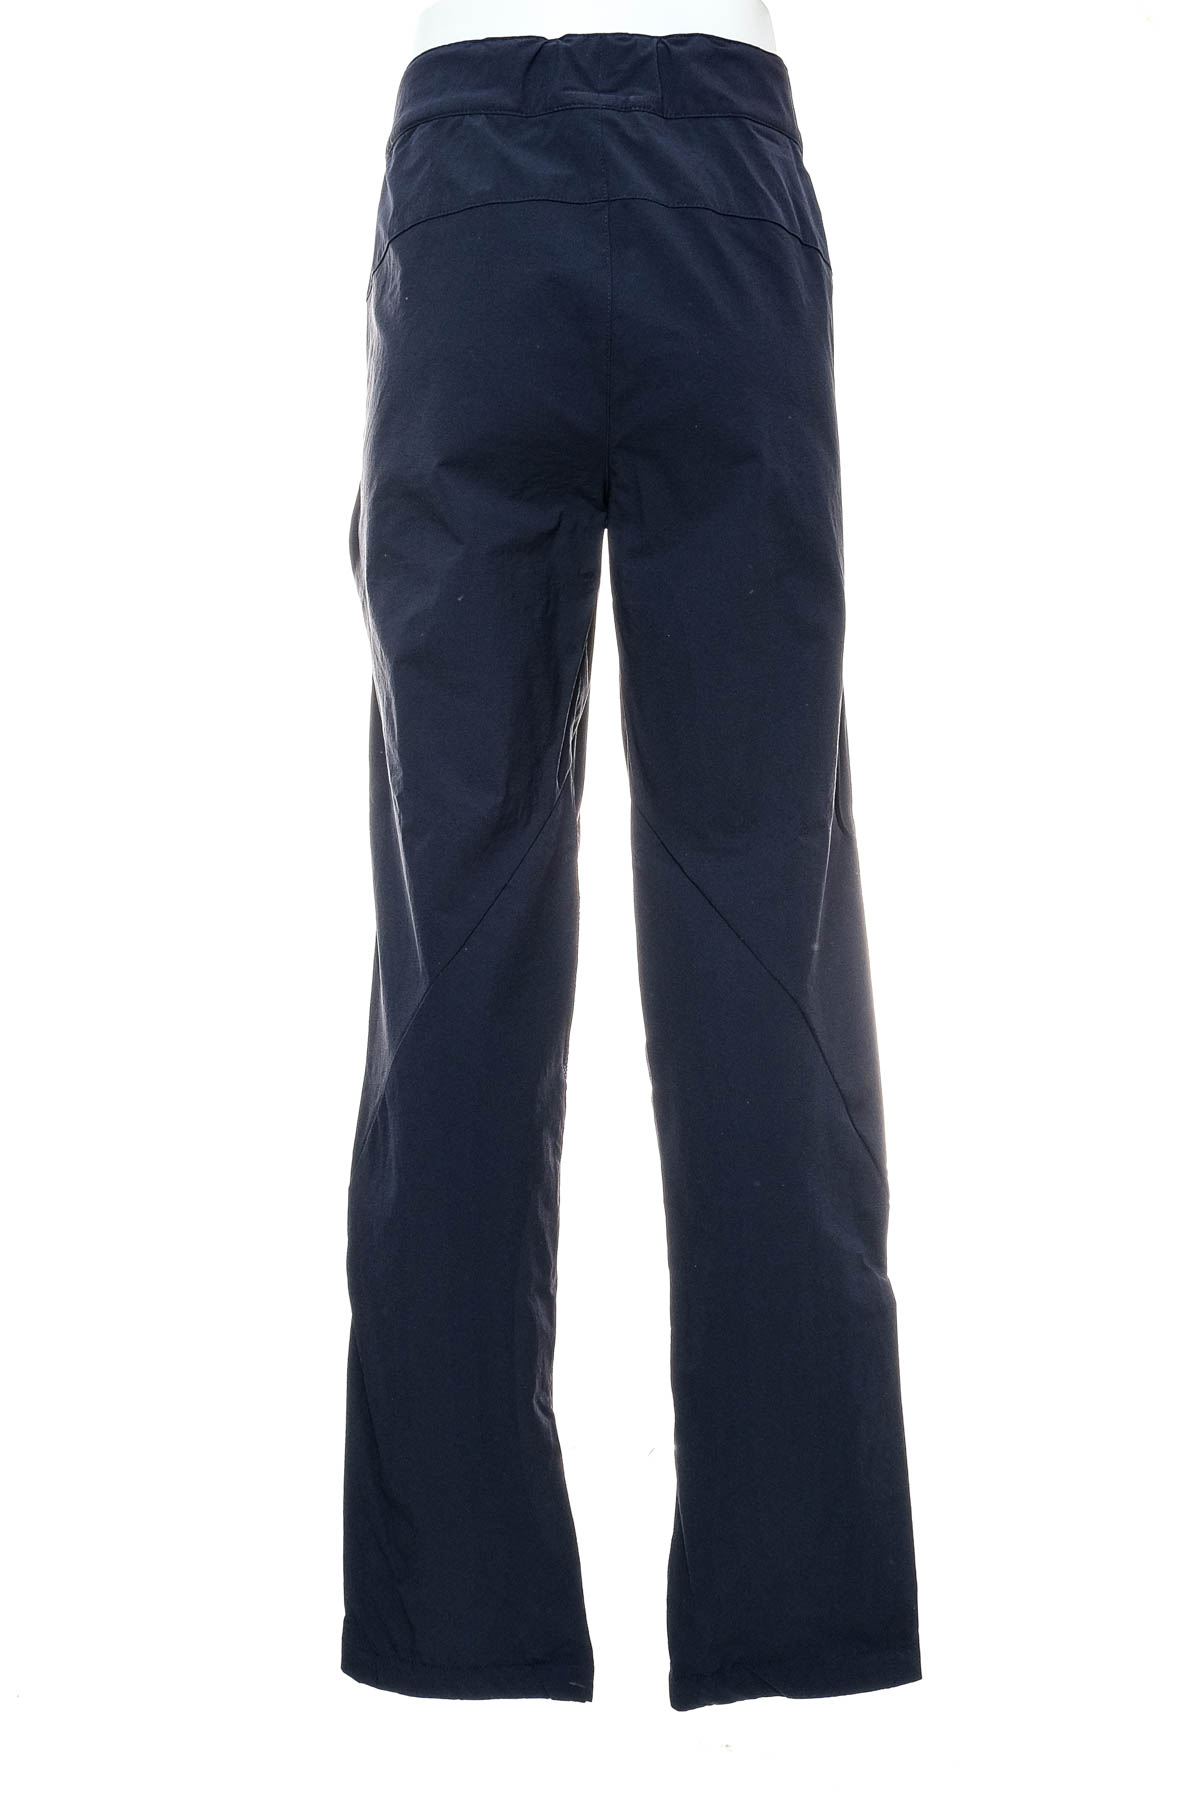 Pantalon pentru bărbați - Active Touch - 1